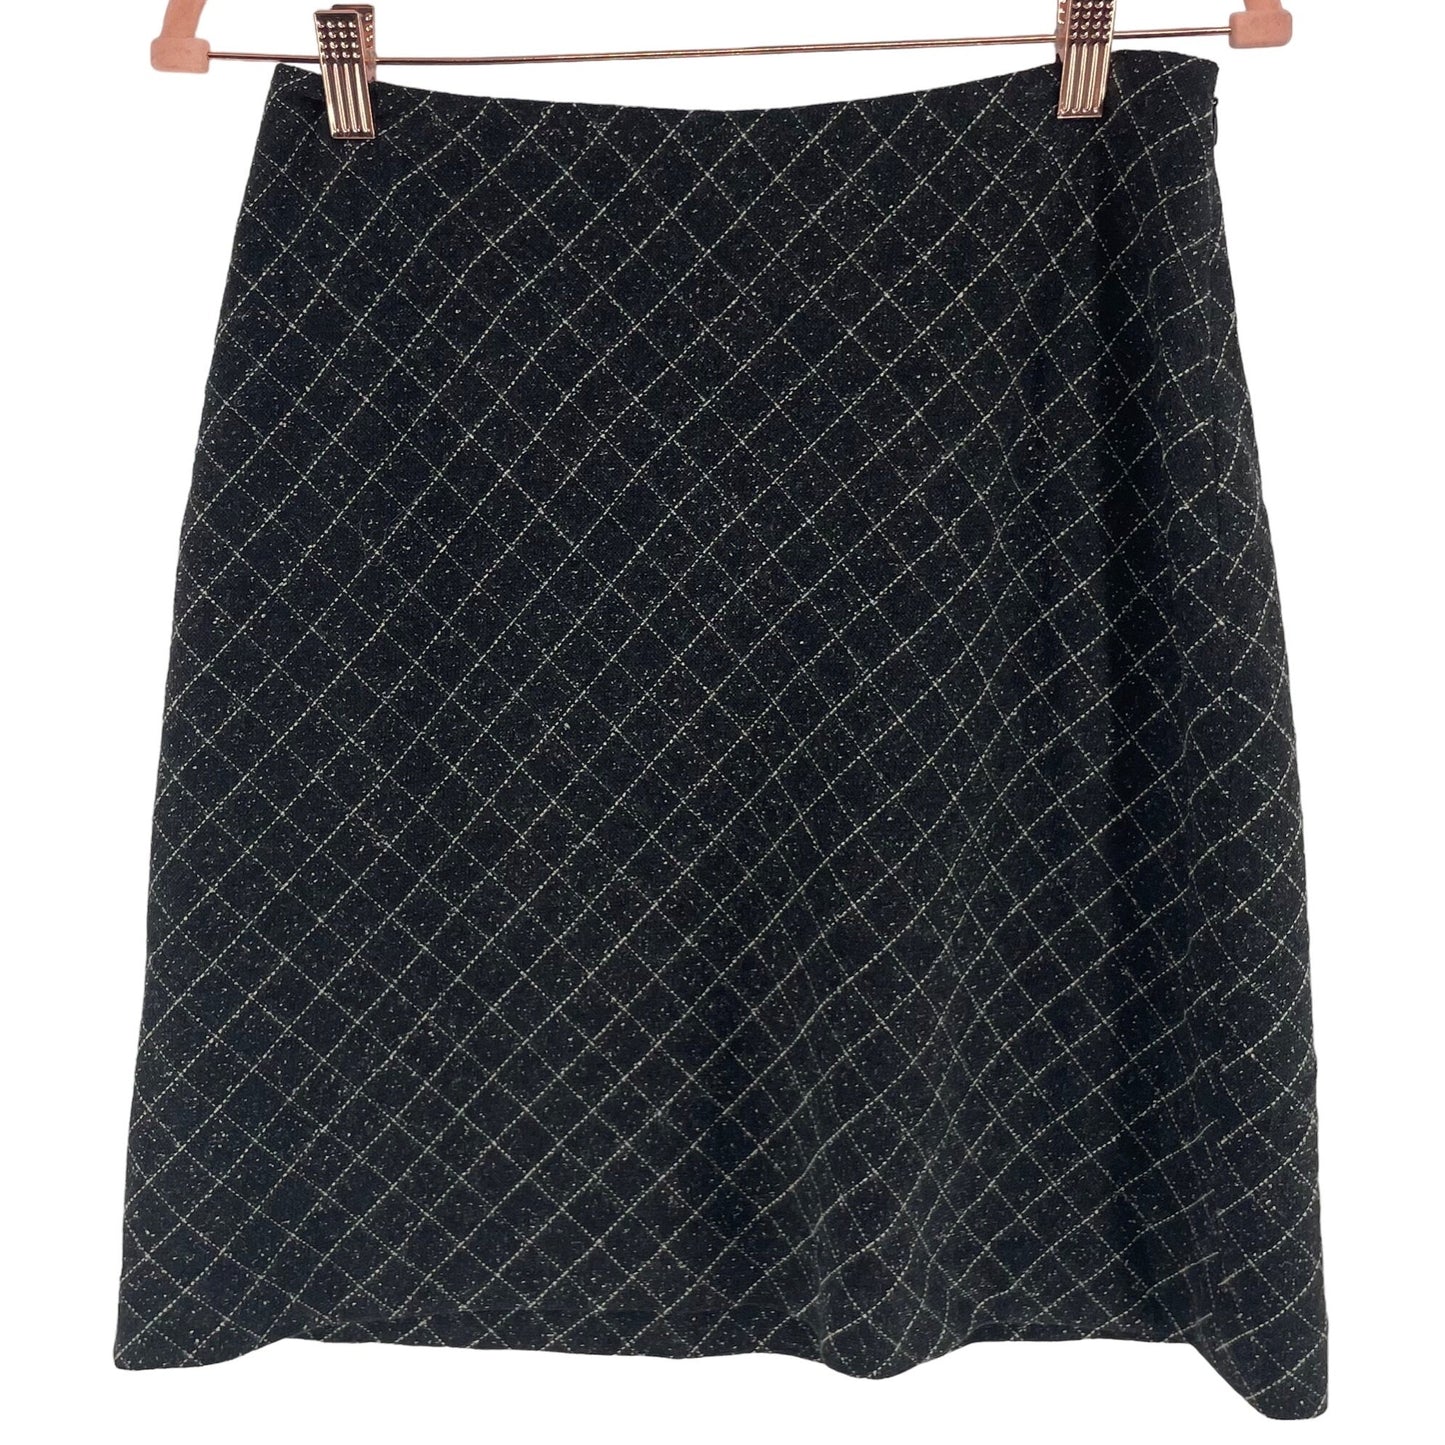 Ann Taylor Women's Size 4 Black & White Wool Blend Skirt